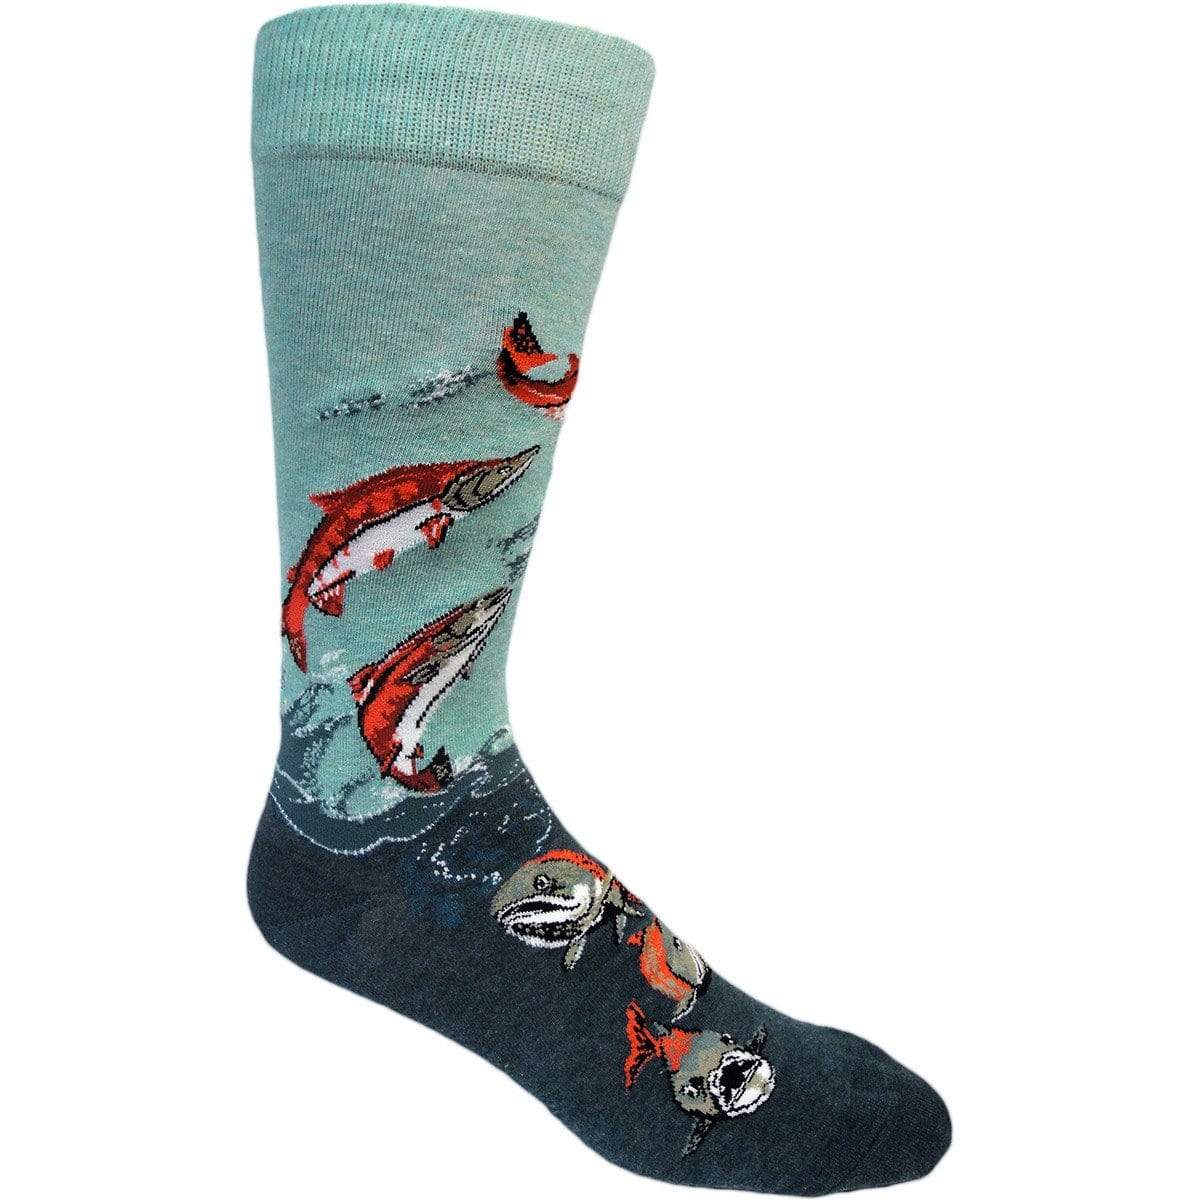 Sockeye Salmon Socks Men’s Crew Sock blue